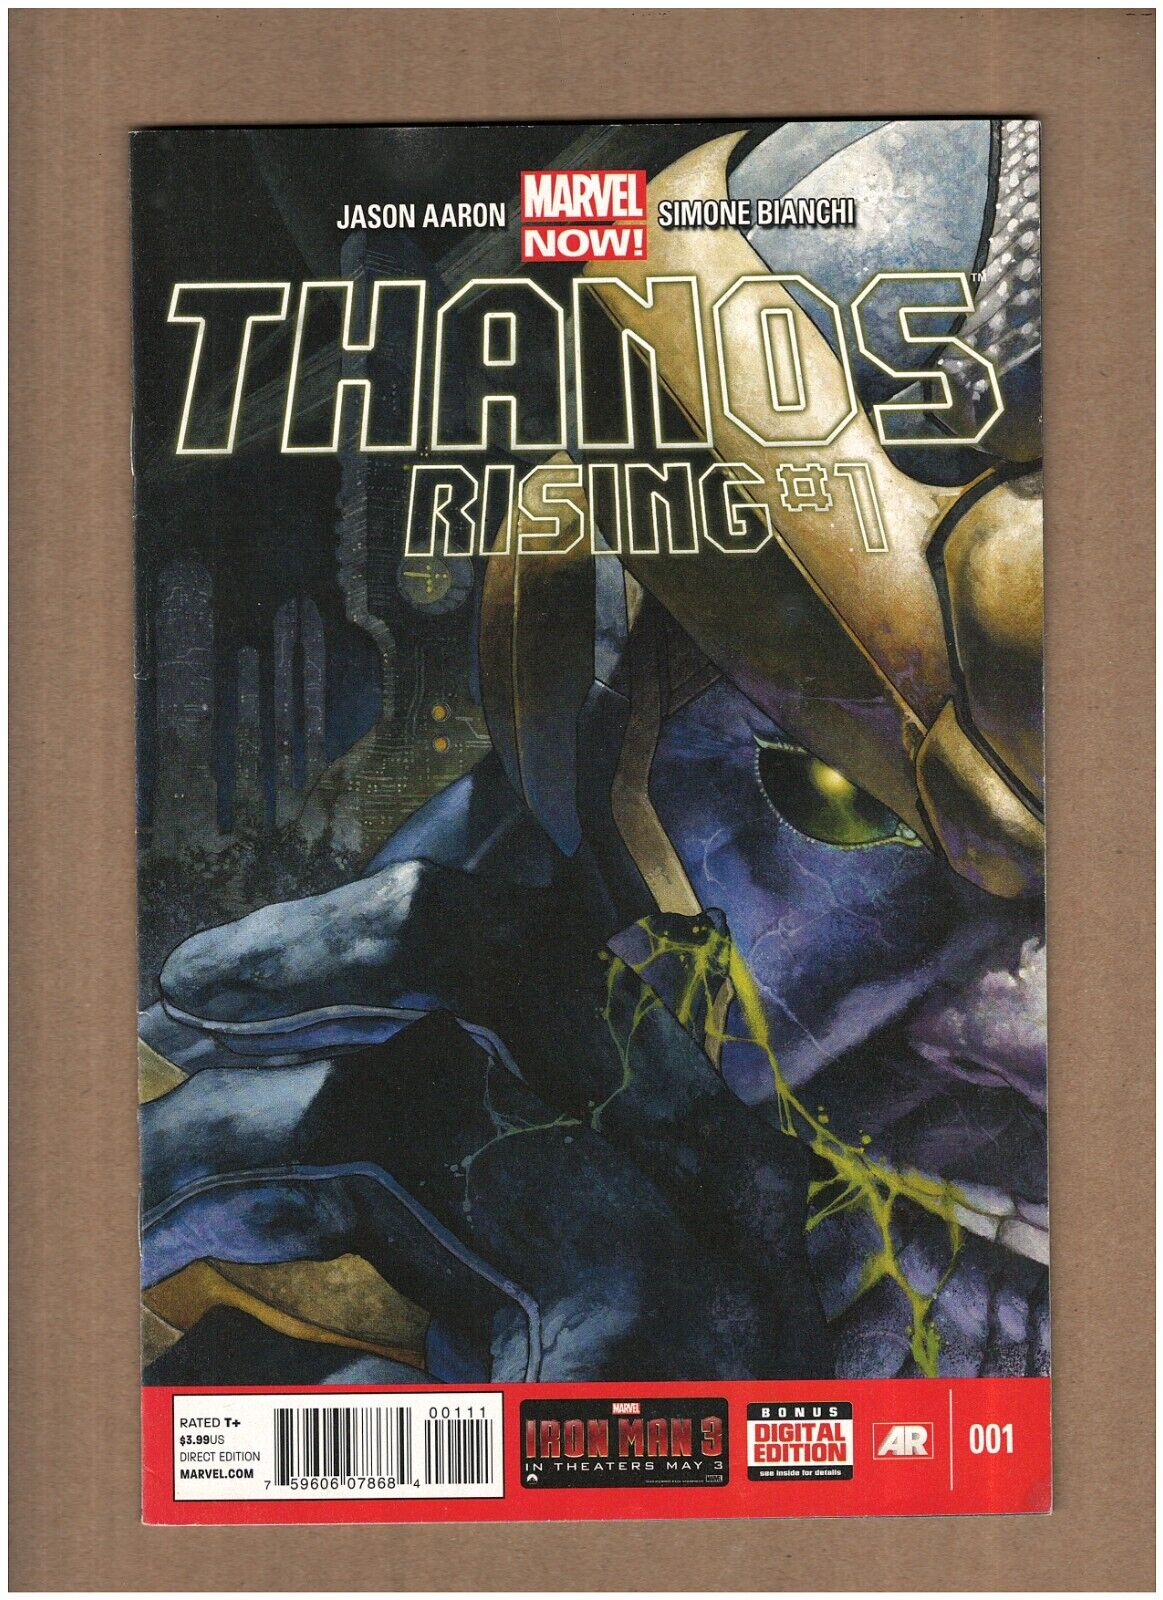 Thanos Rising #1 Marvel Comics 2013 Jason Aaron VF+ 8.5